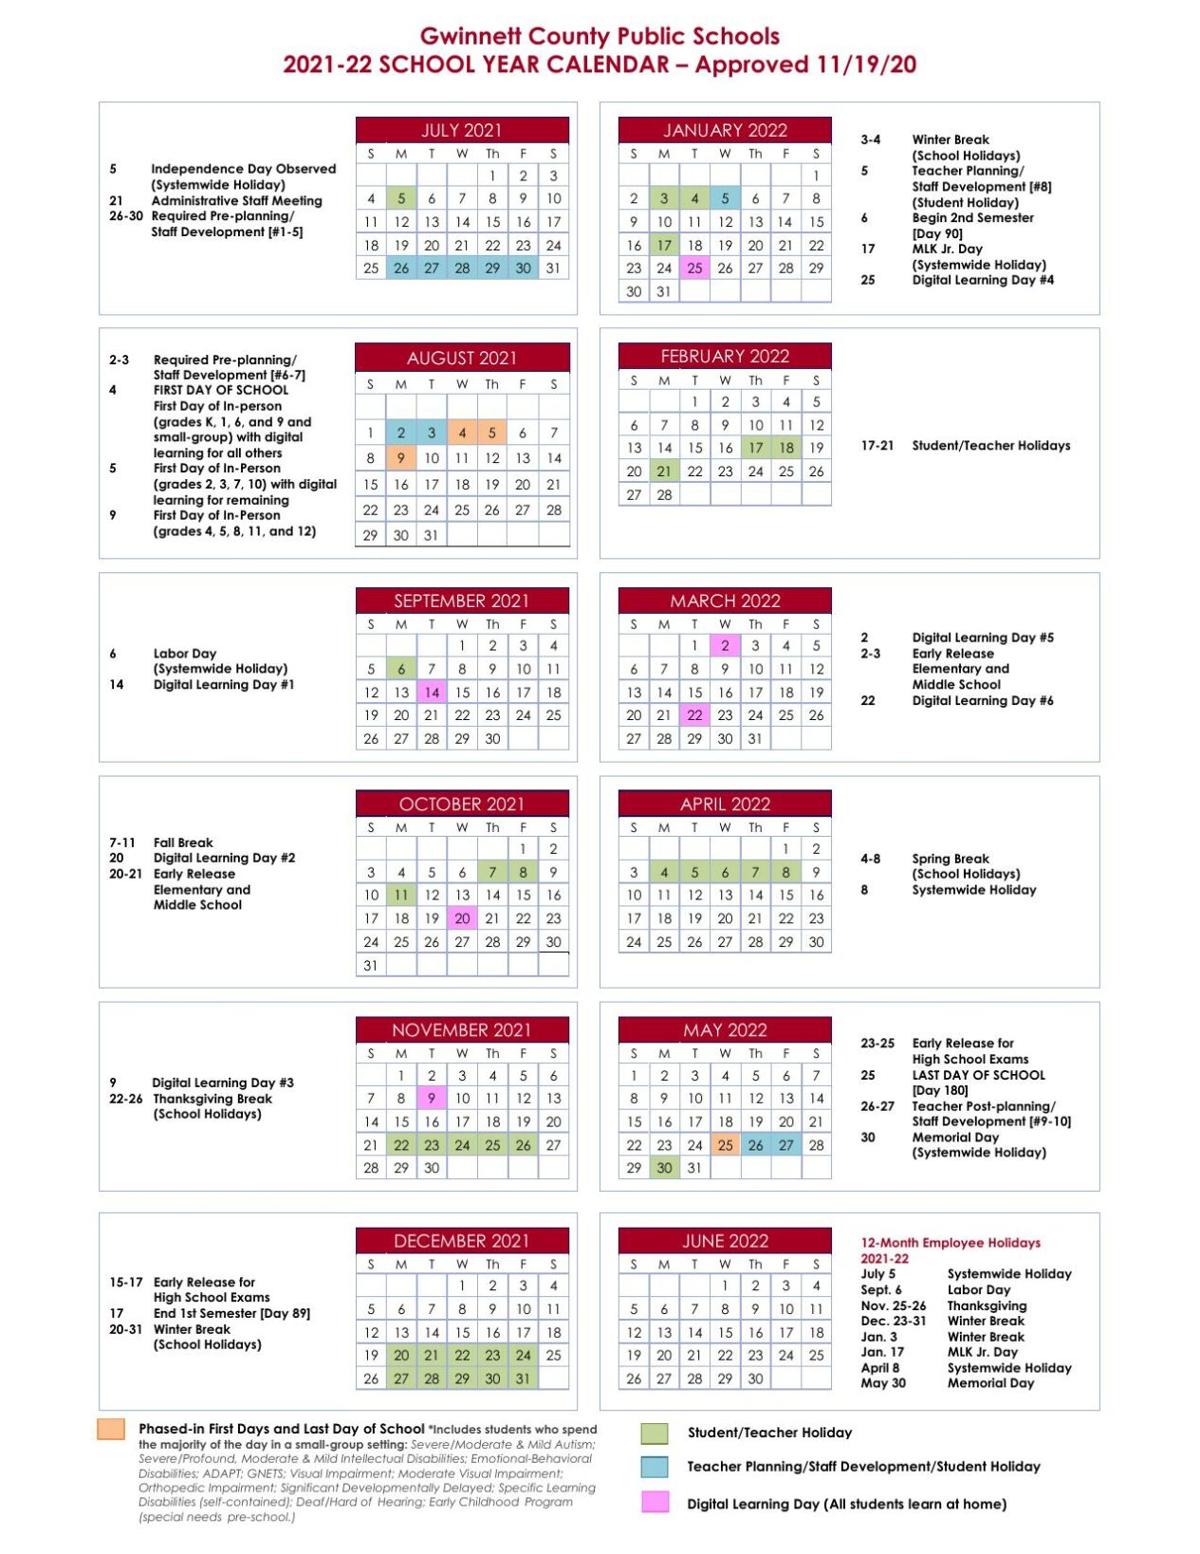 Georgia Tech Spring 2022 Calendar Gwinnett County Public Schools' 2021-2022 School Year Calendar | |  Gwinnettdailypost.com